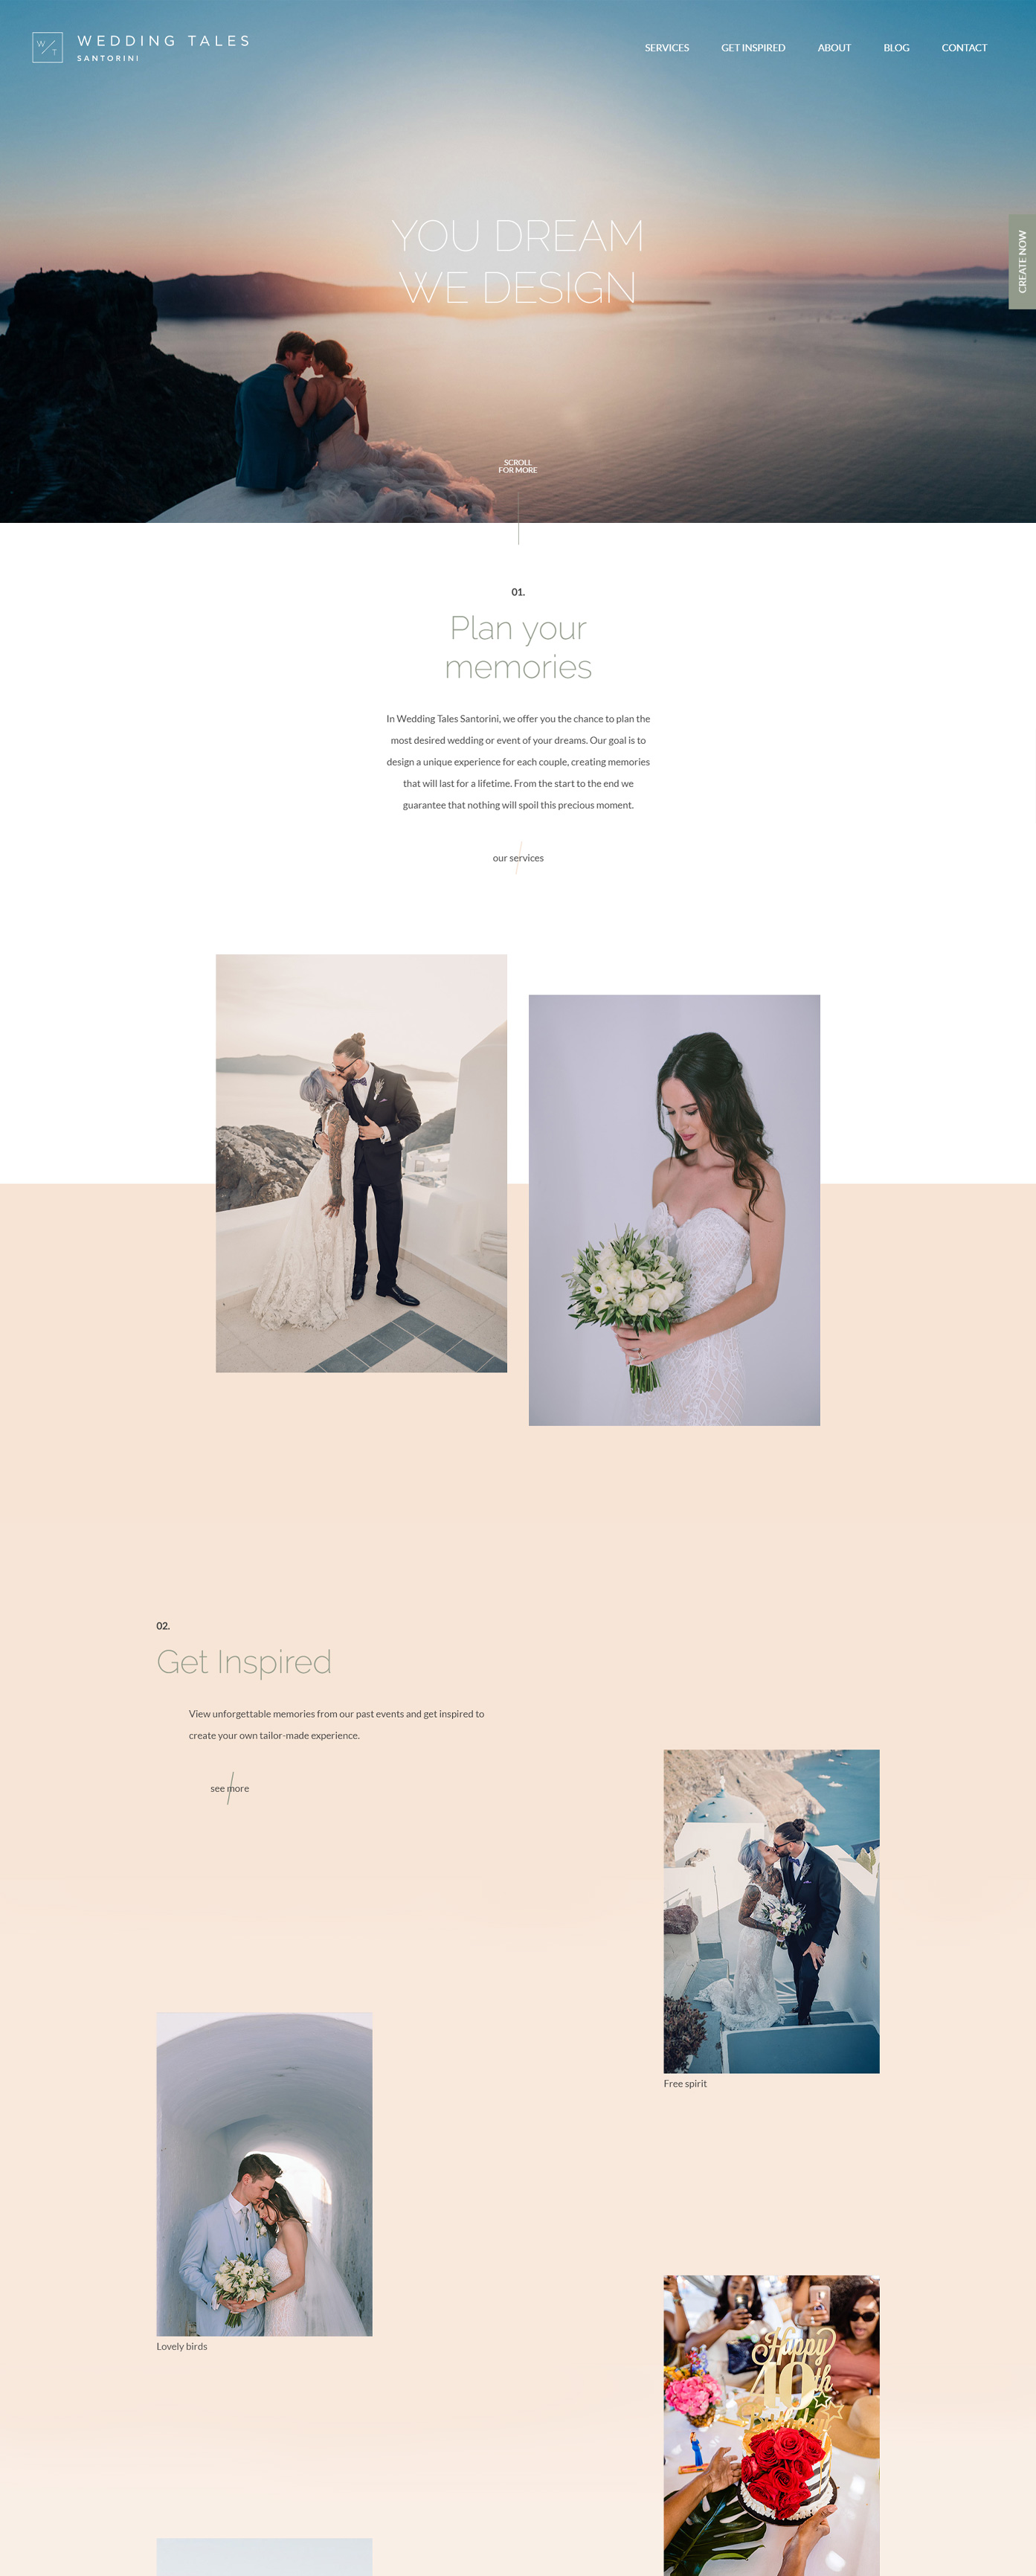 Wedding Tales Santorini homepage fullscreen